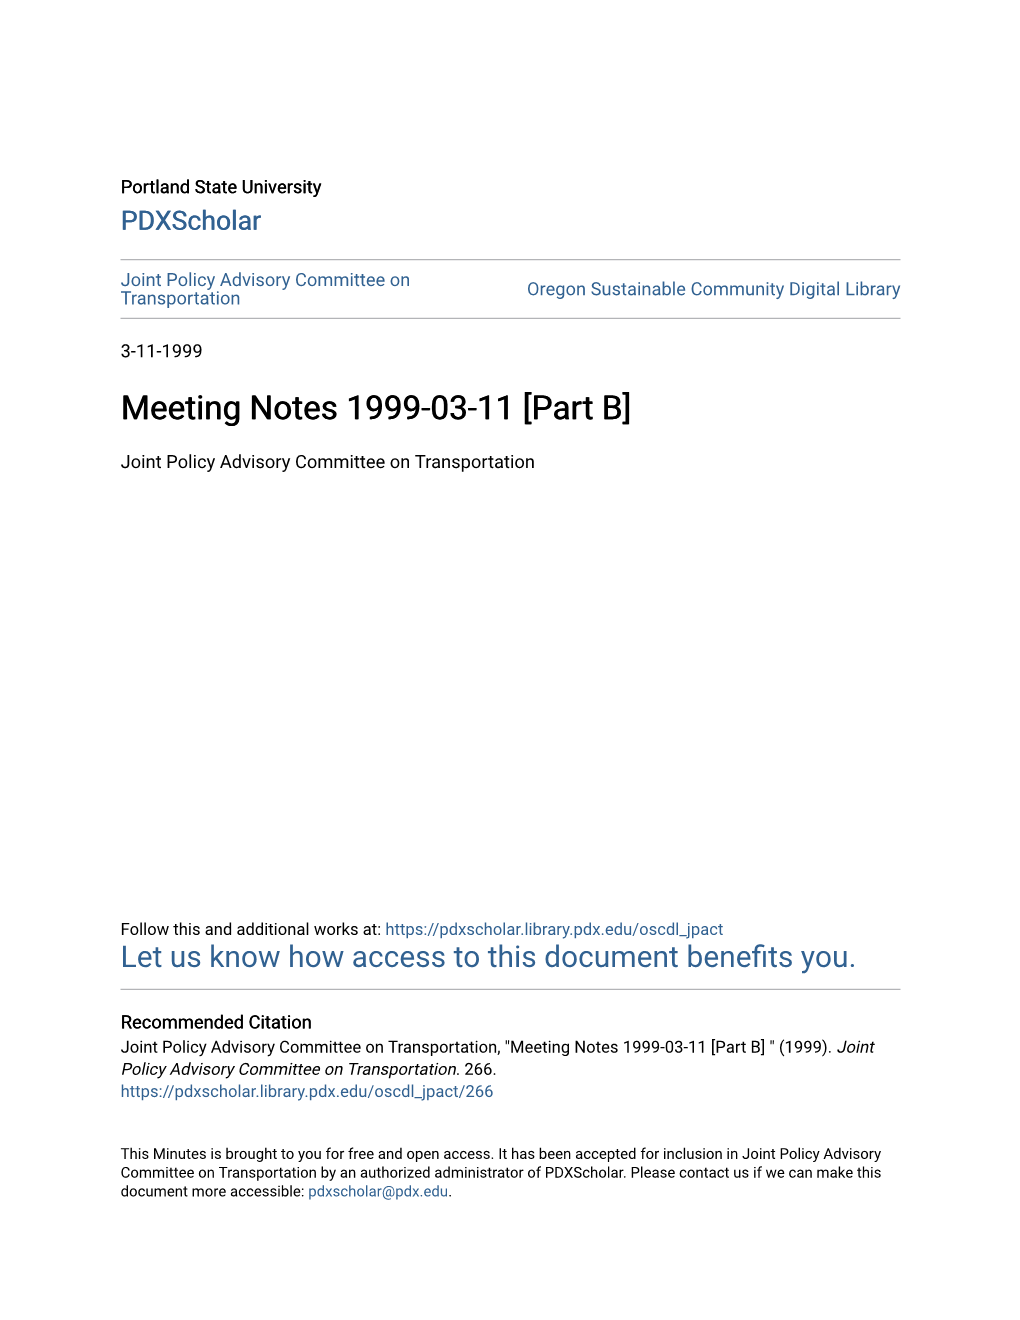 Meeting Notes 1999-03-11 [Part B]